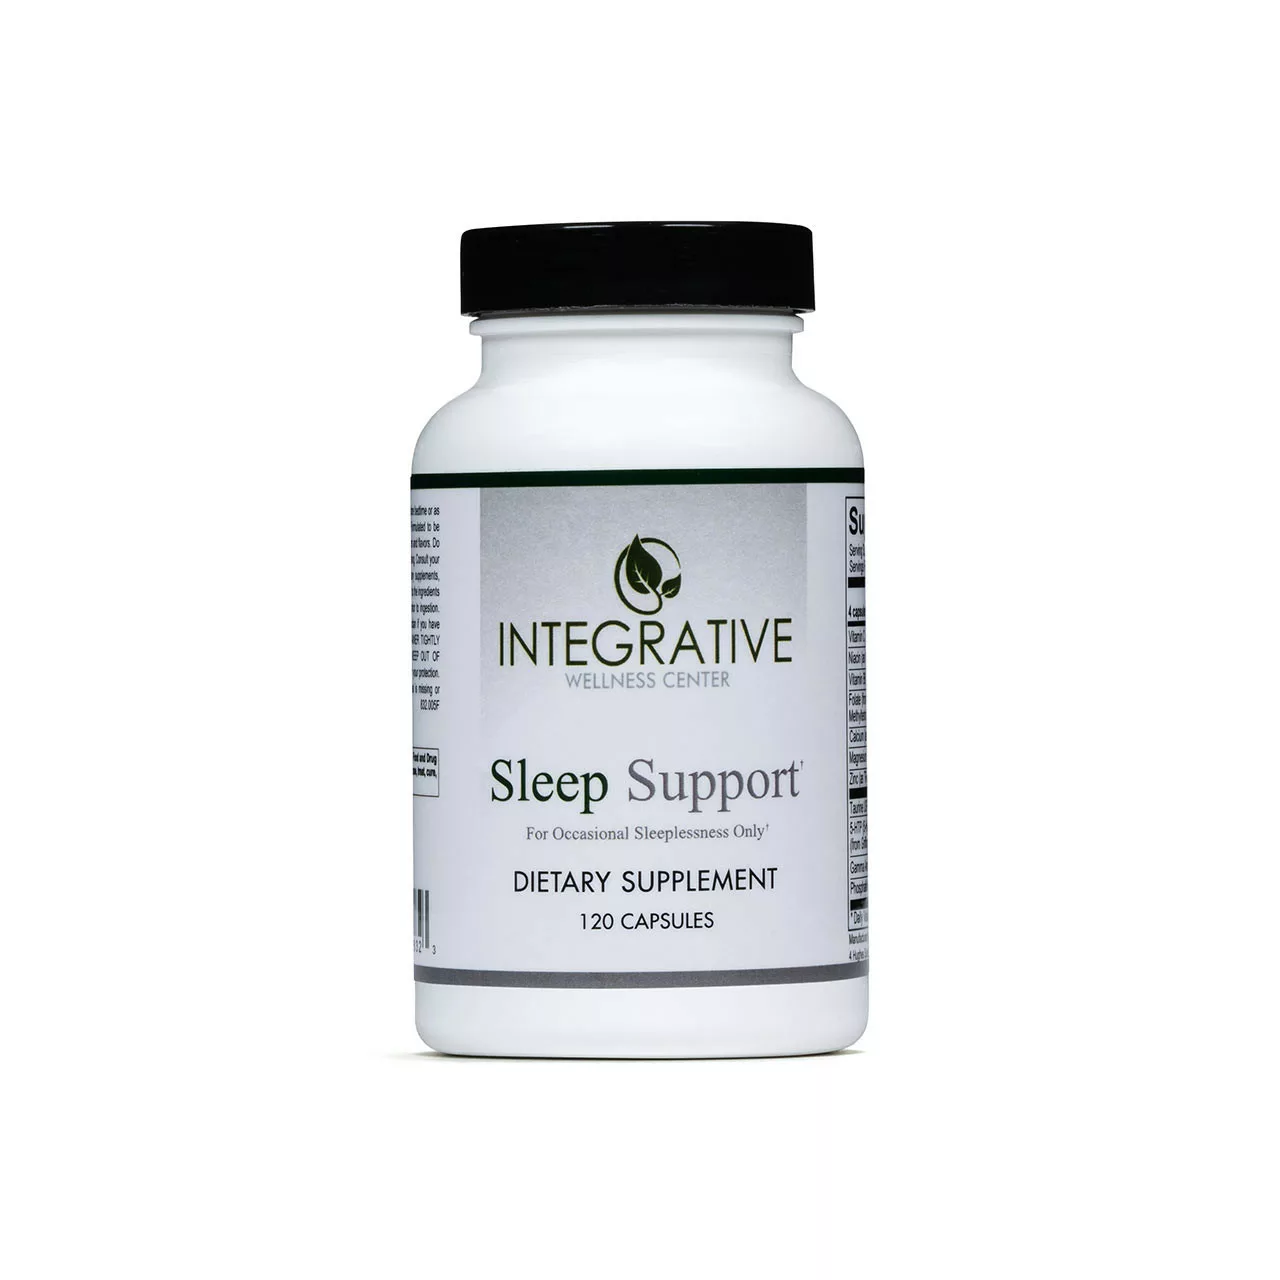 Sleep Support bottle